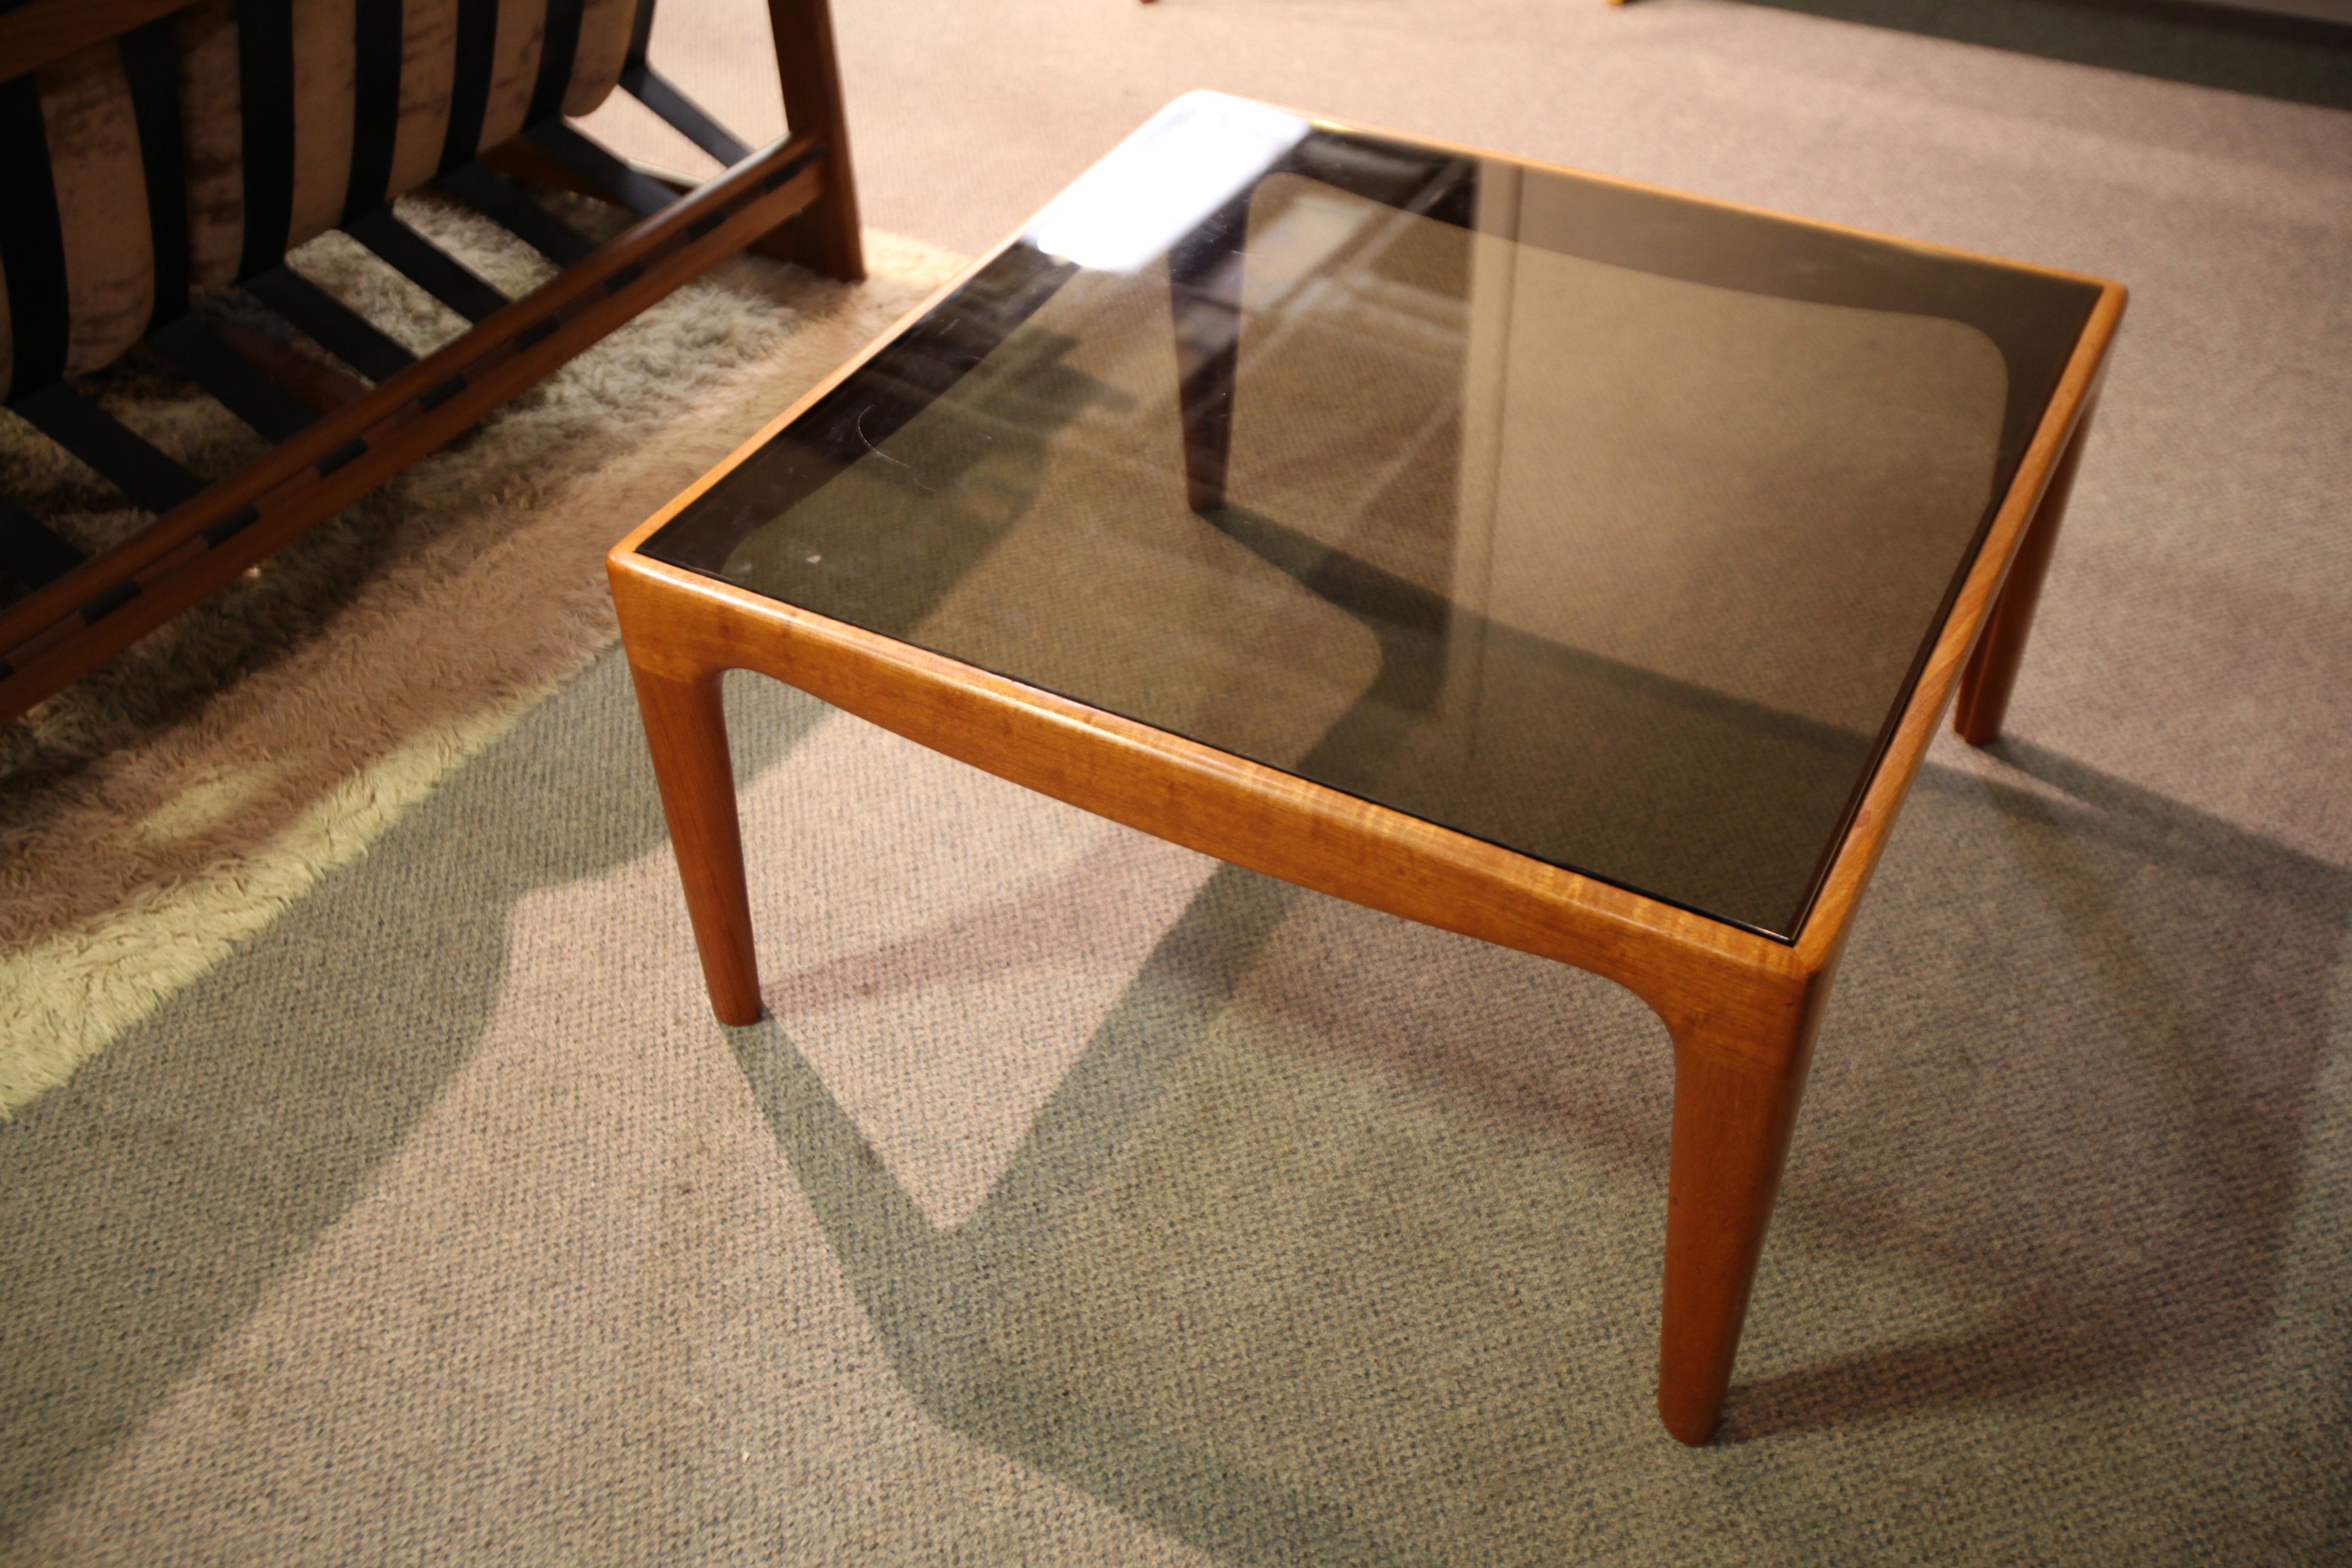 Square Teak / Glass End Table (29.5" x 29.5" x 16"H)